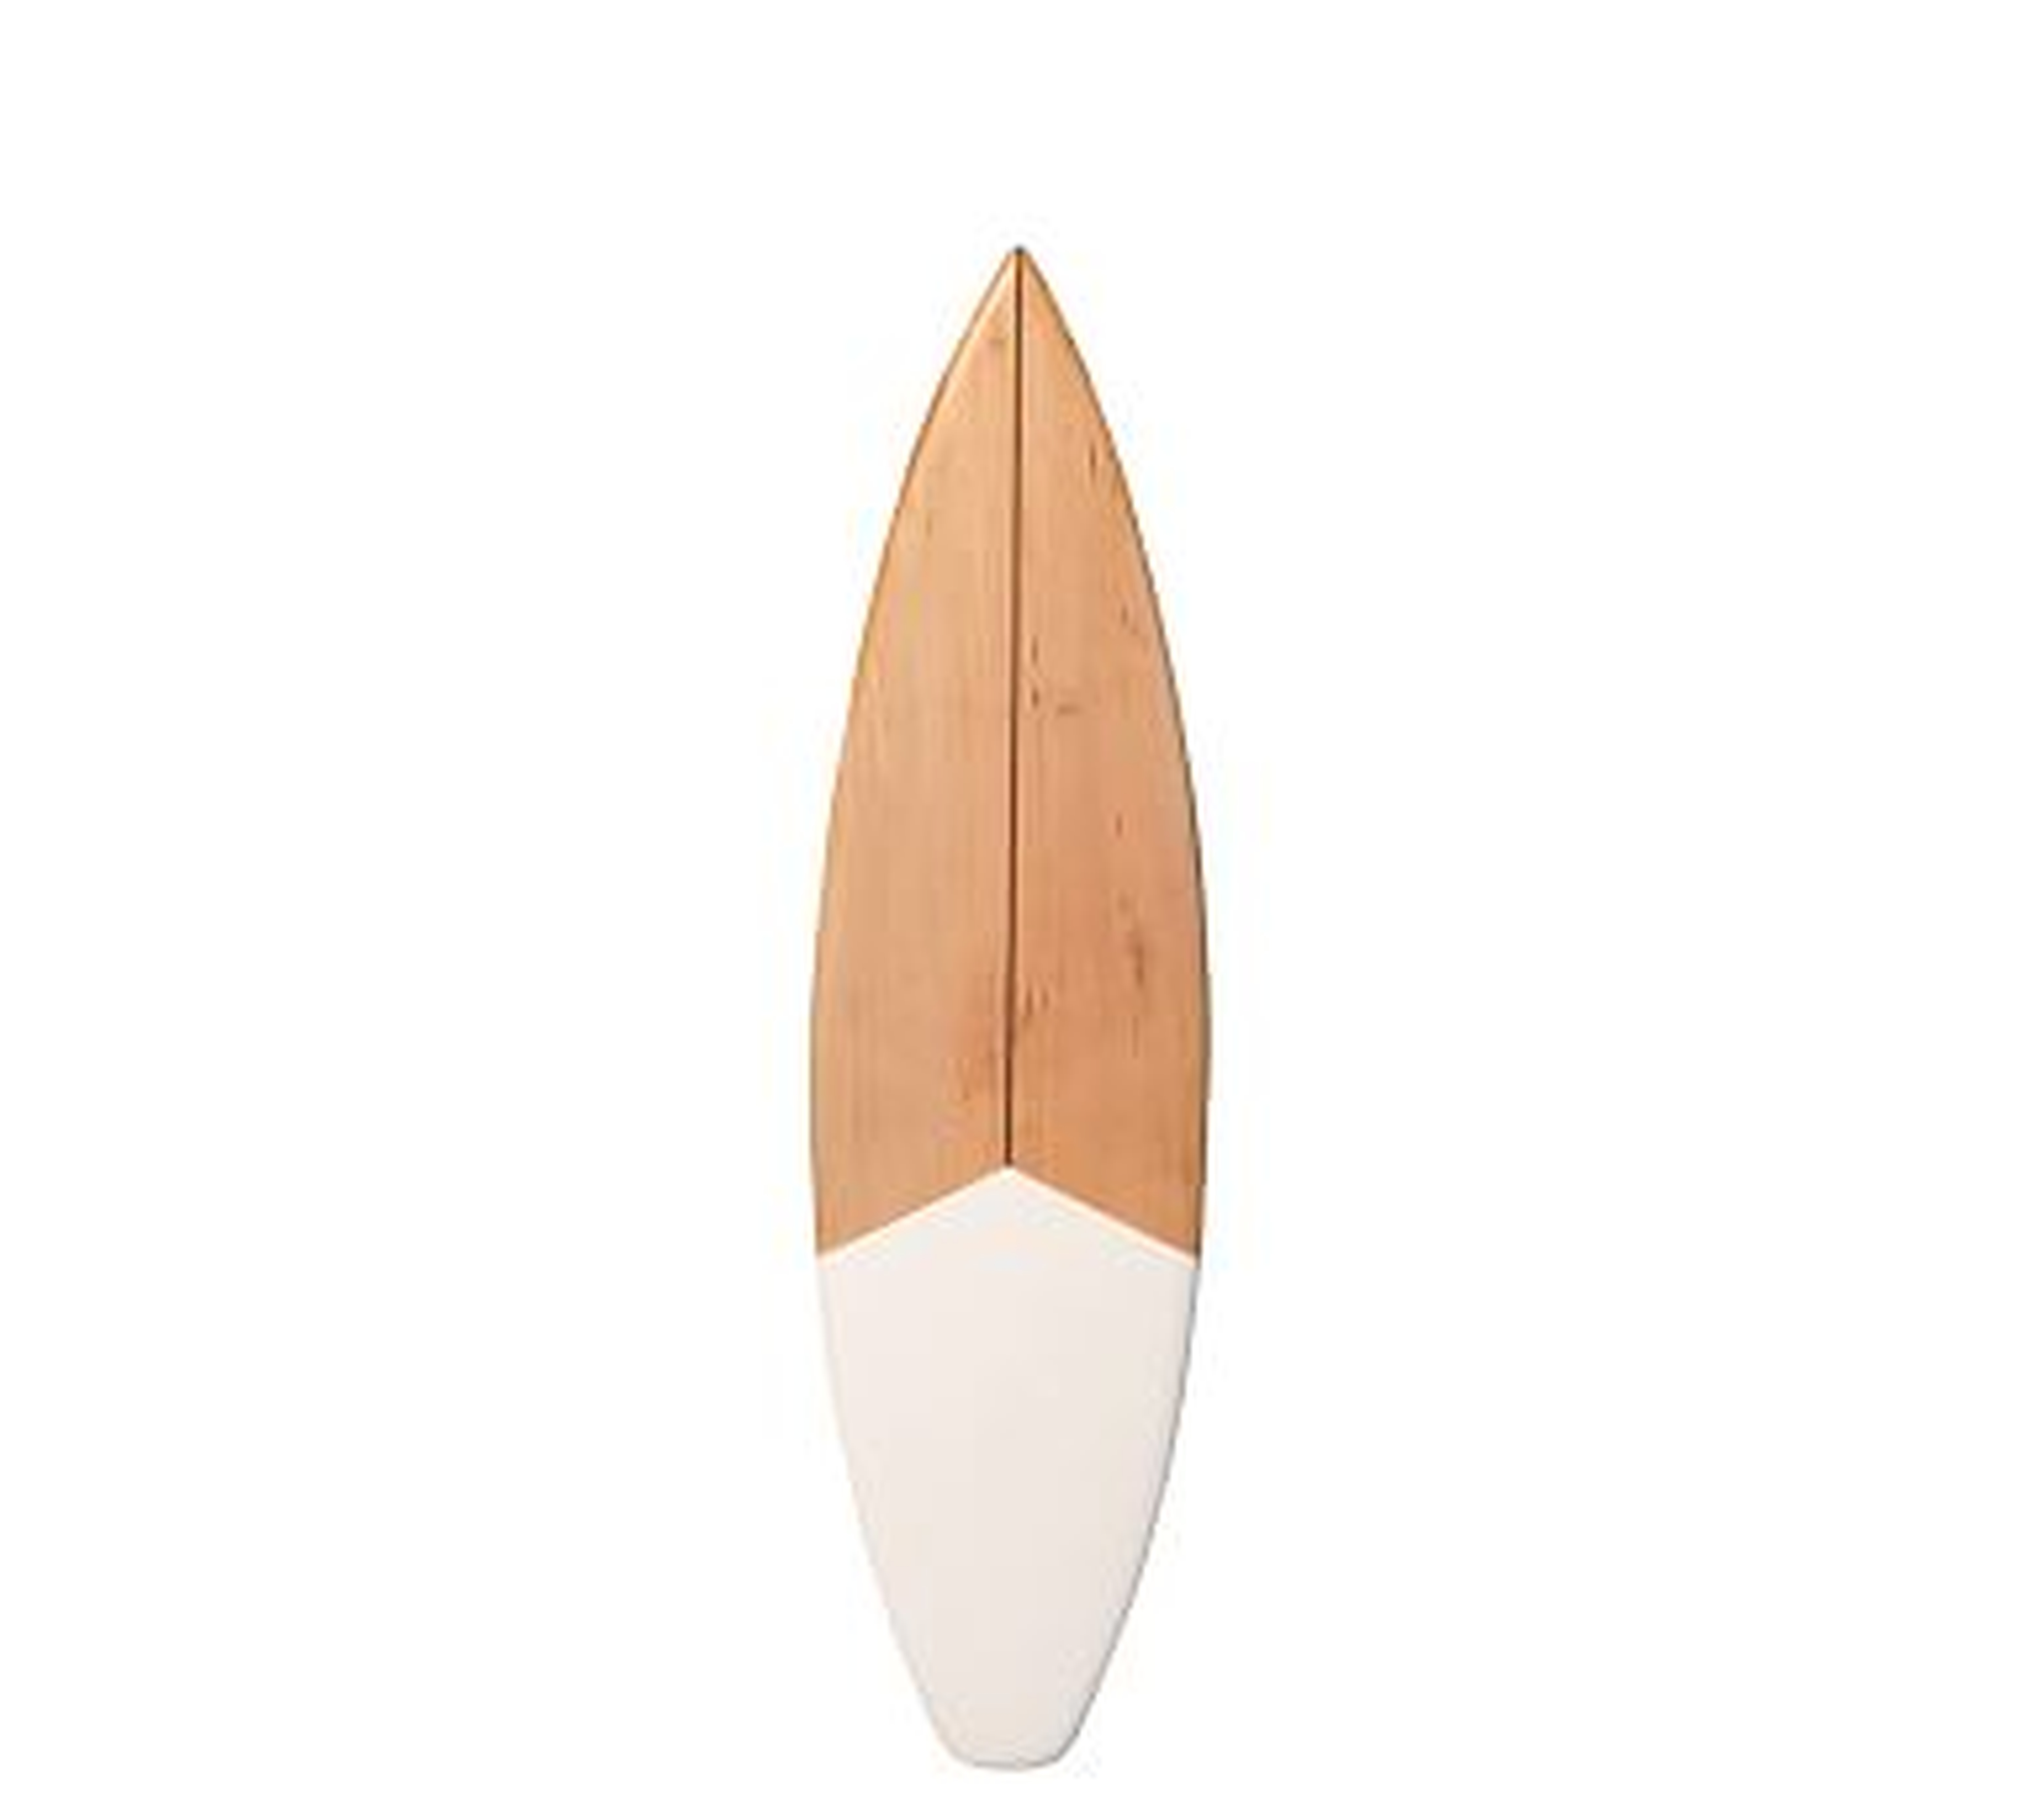 Shortboard Surfboard Matte White Wall Art, 4' - Pottery Barn